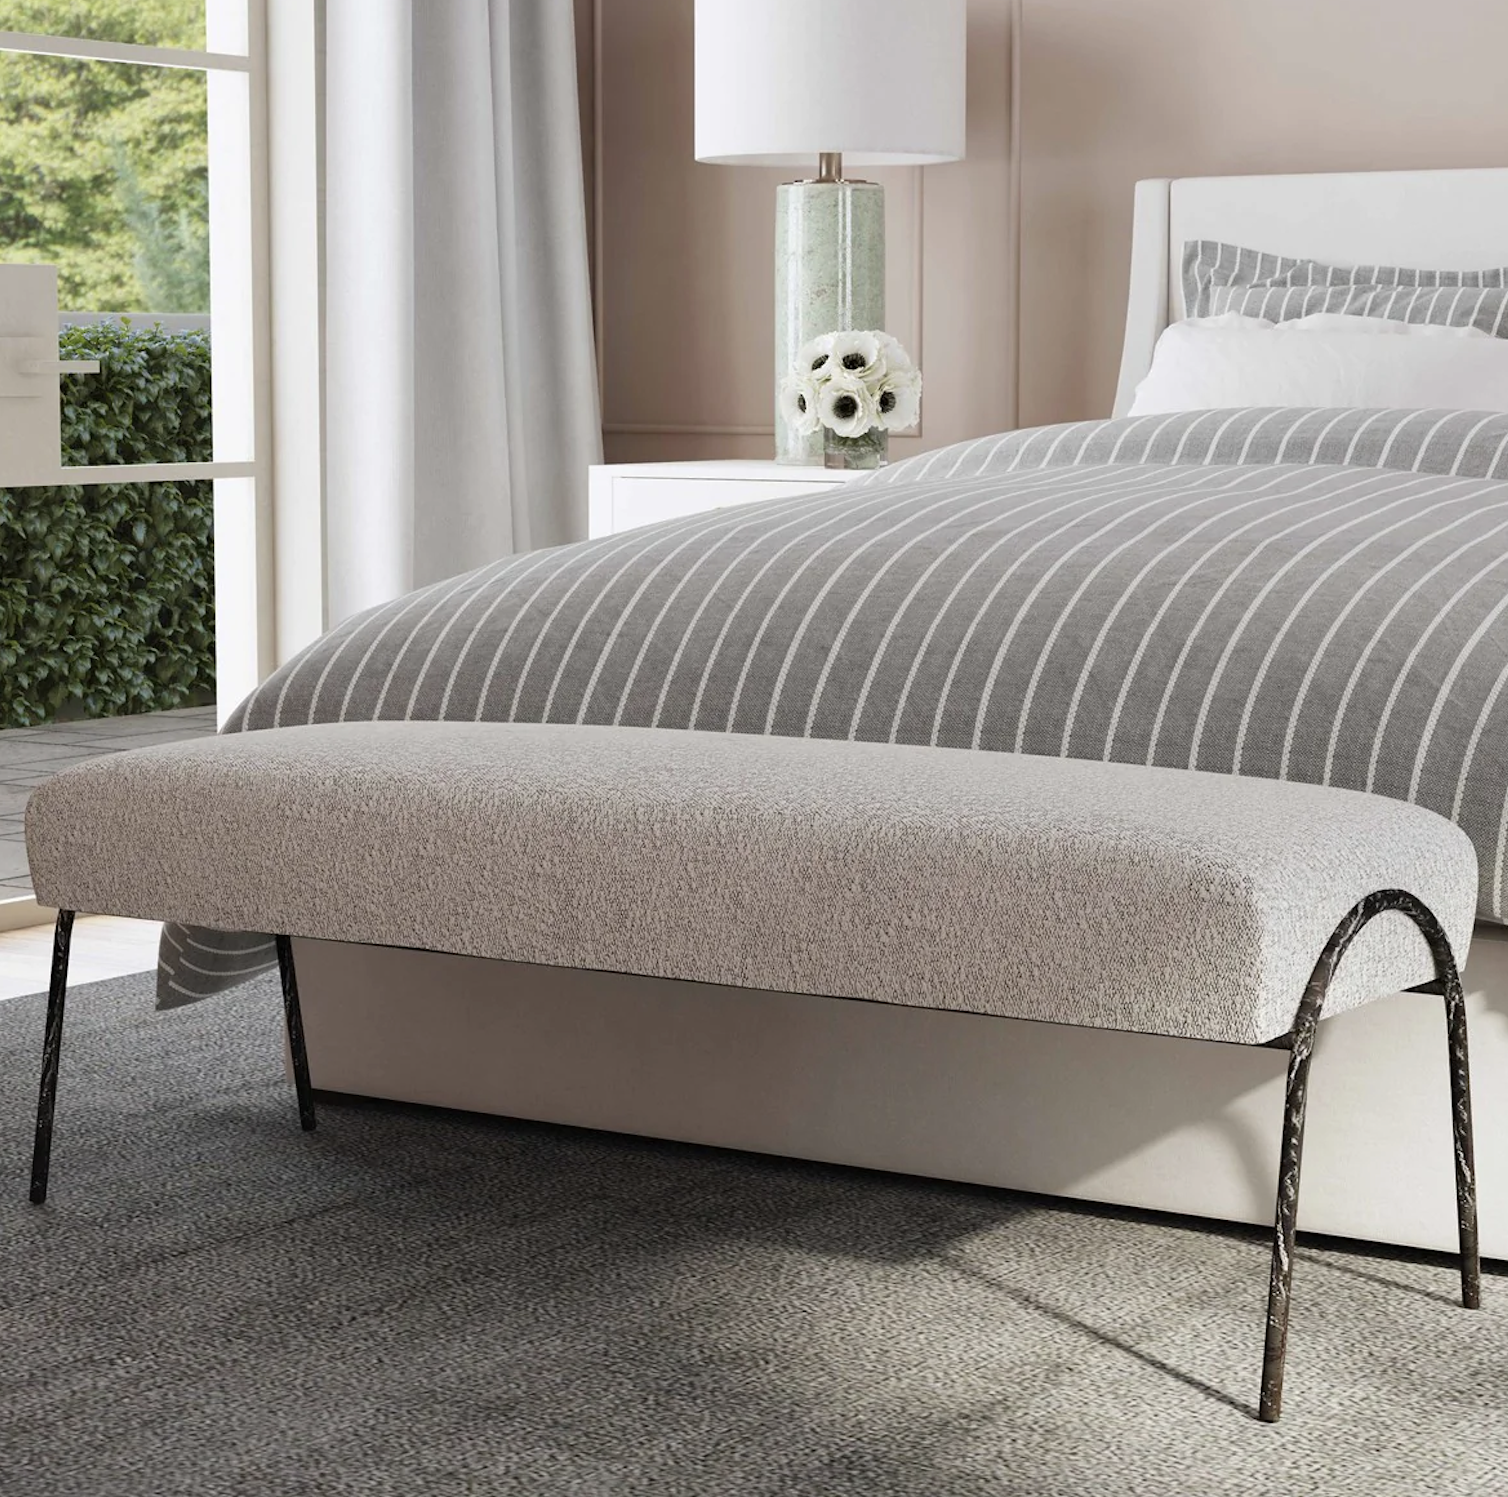 Bed Bench design